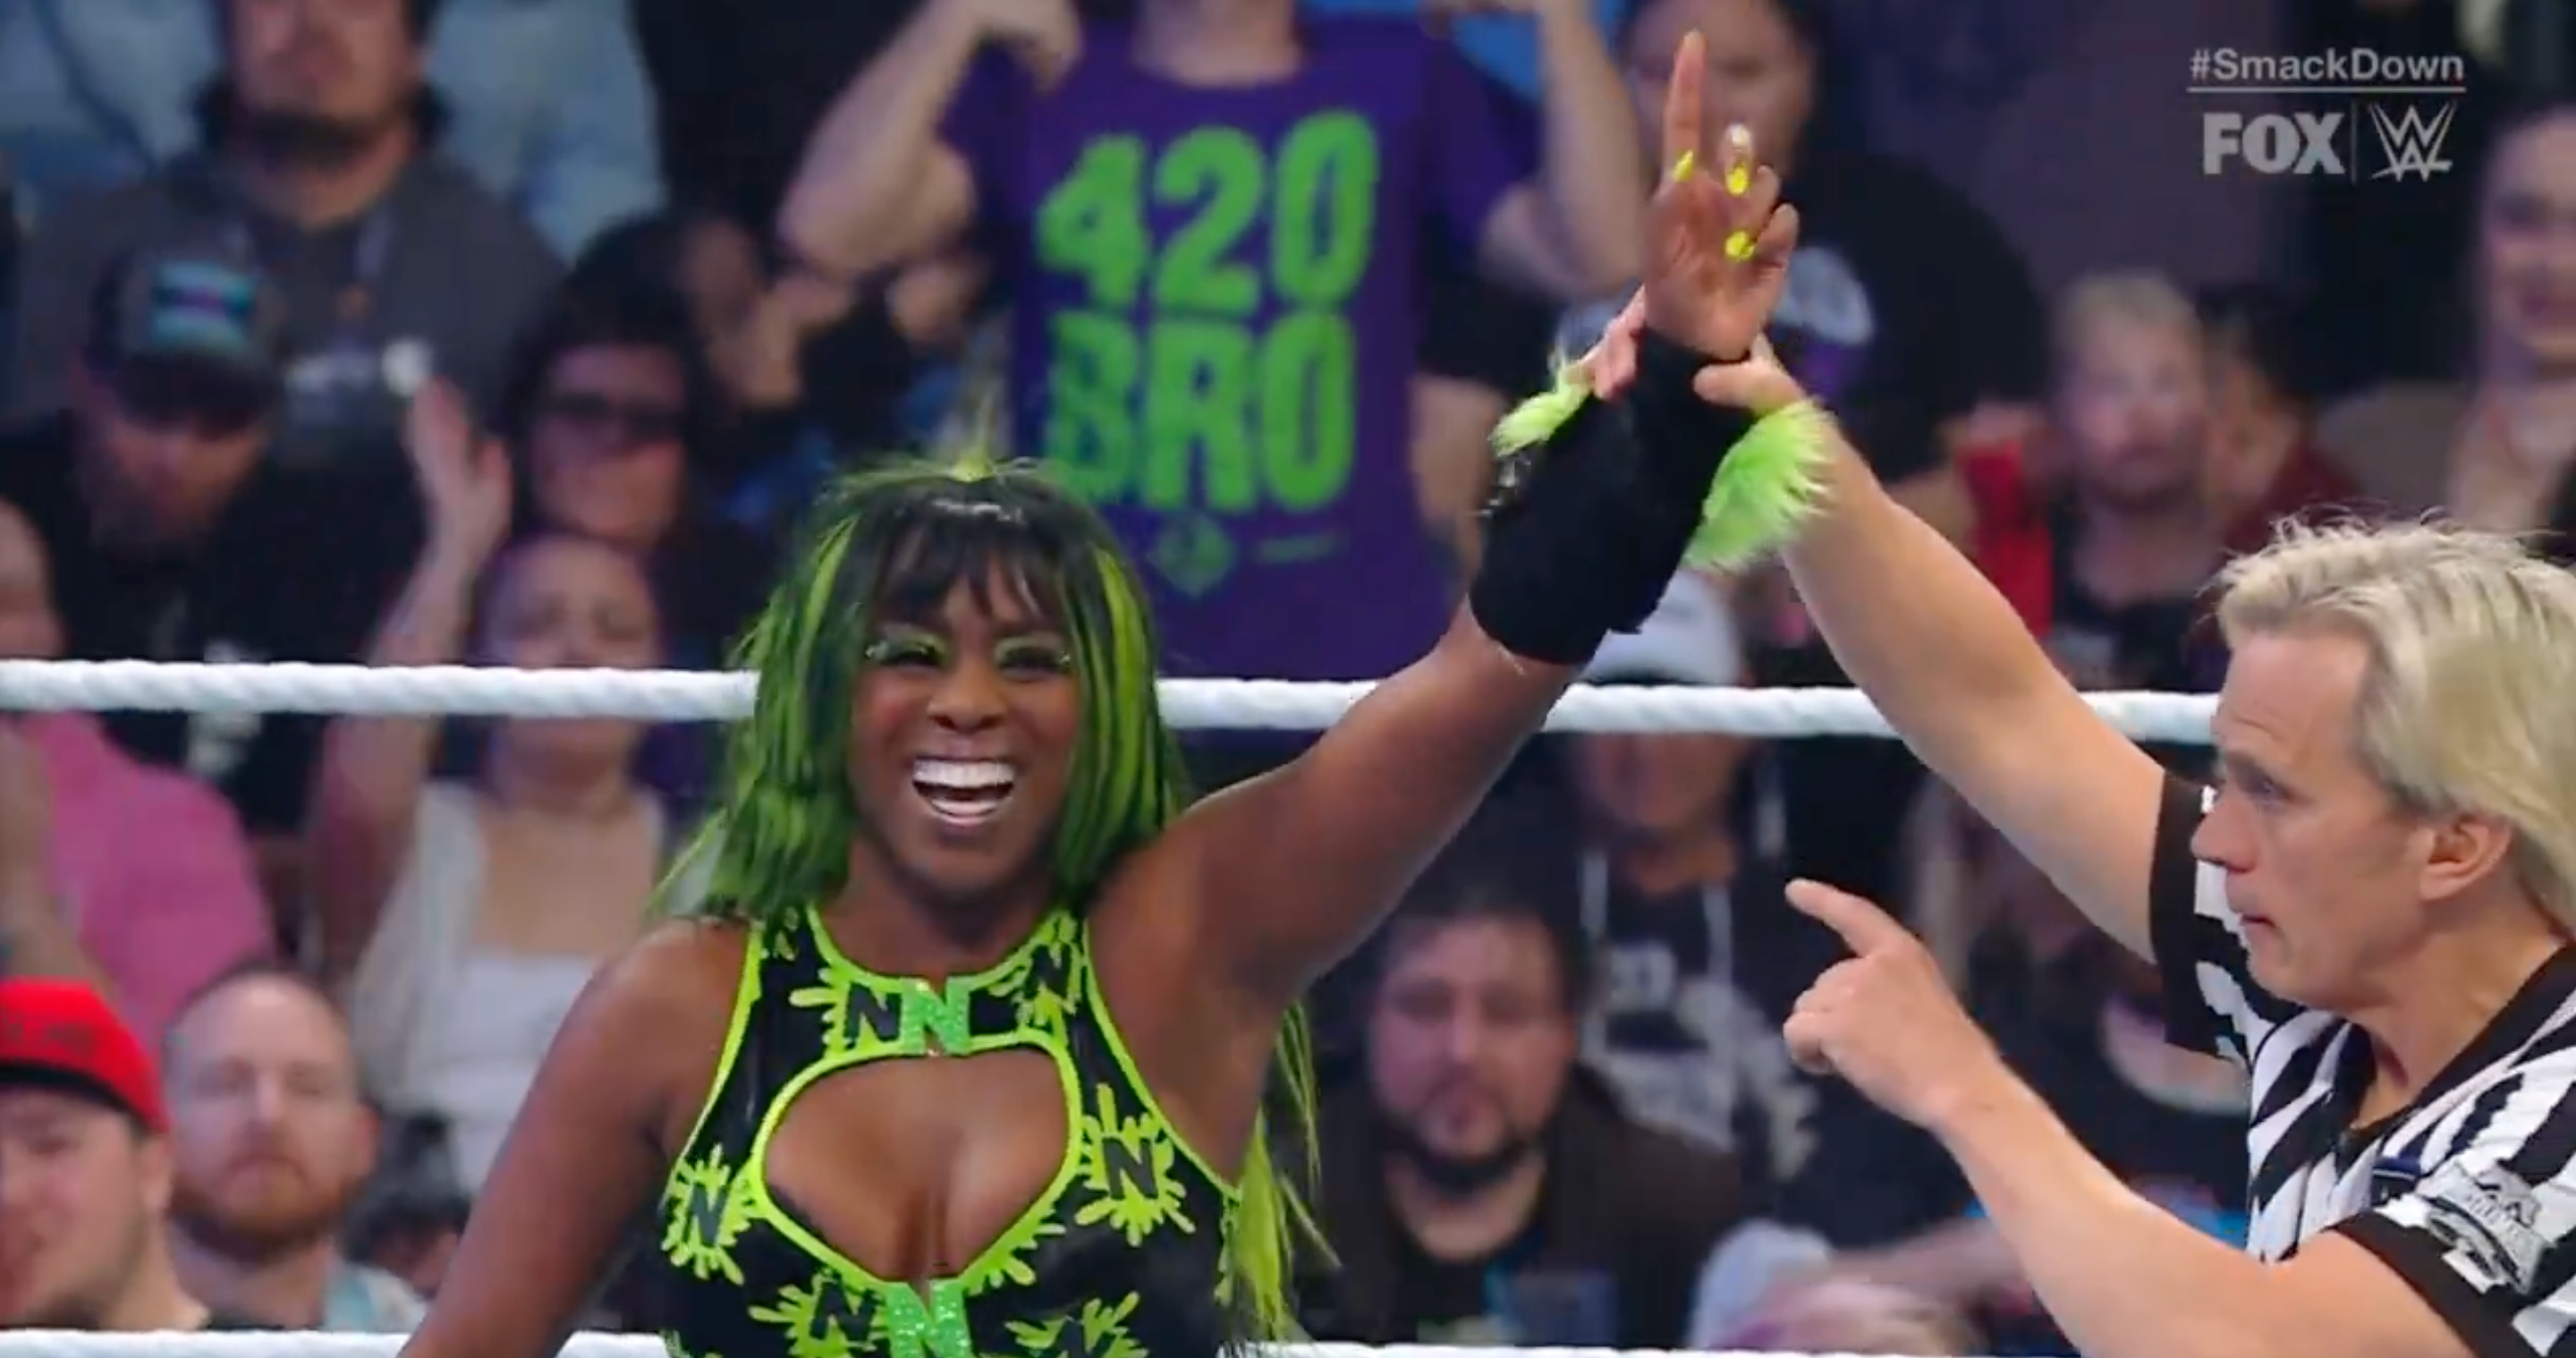 Naomi Advances to the Women's Elimination Chamber on WWE SmackDown